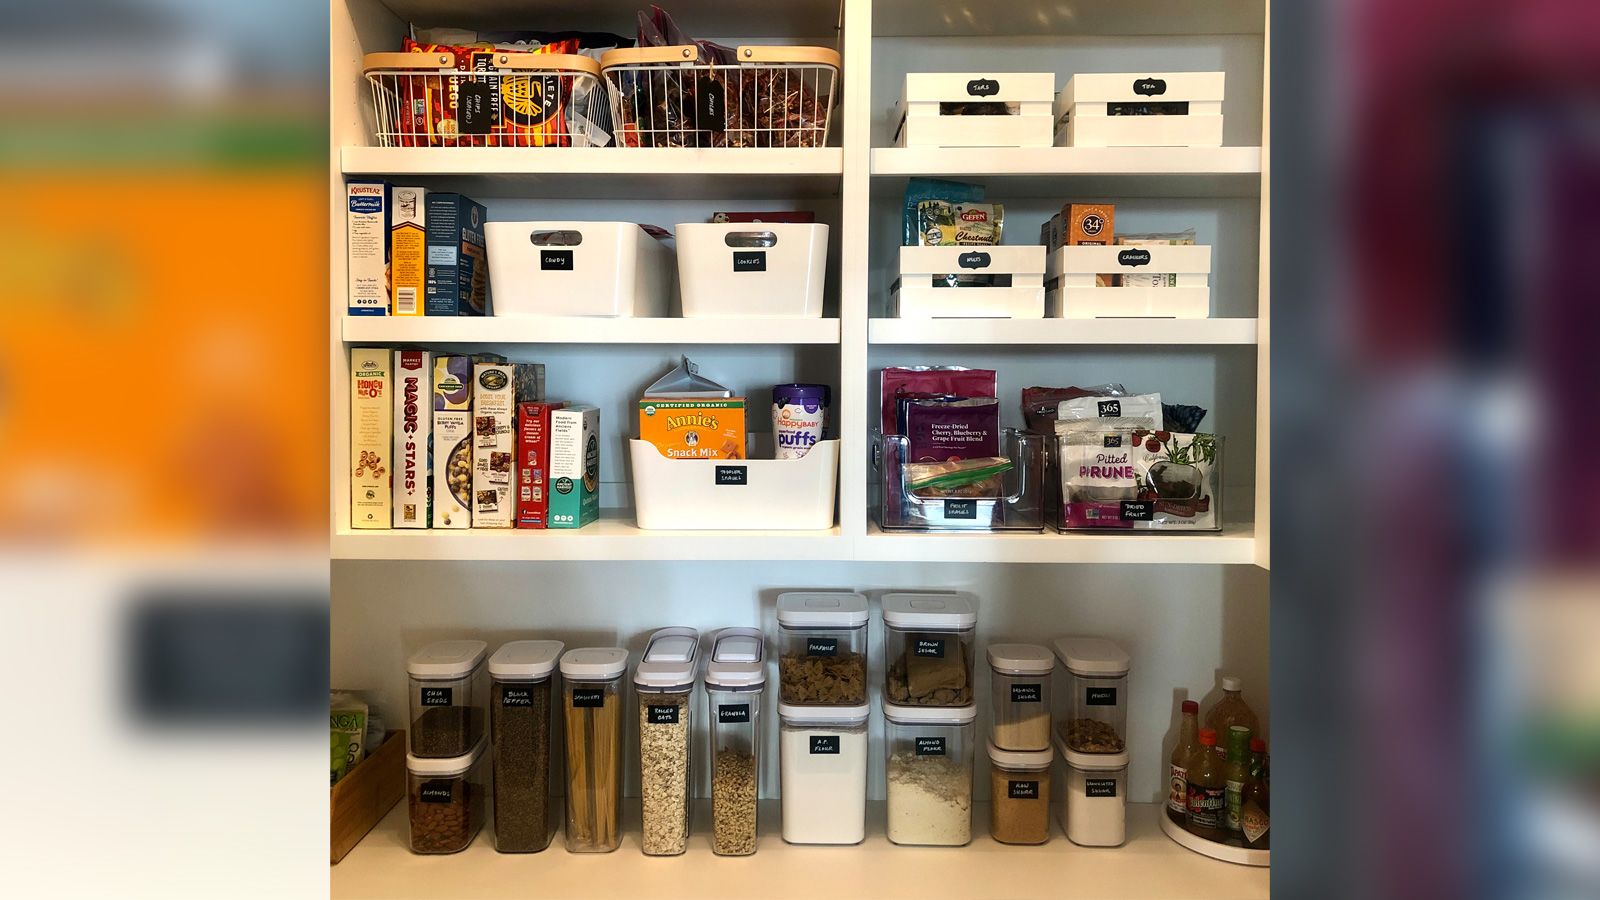 https://media.cnn.com/api/v1/images/stellar/prod/230316123532-02-kitchen-organizing-pantry-containers-wellness-save-space.jpg?c=original